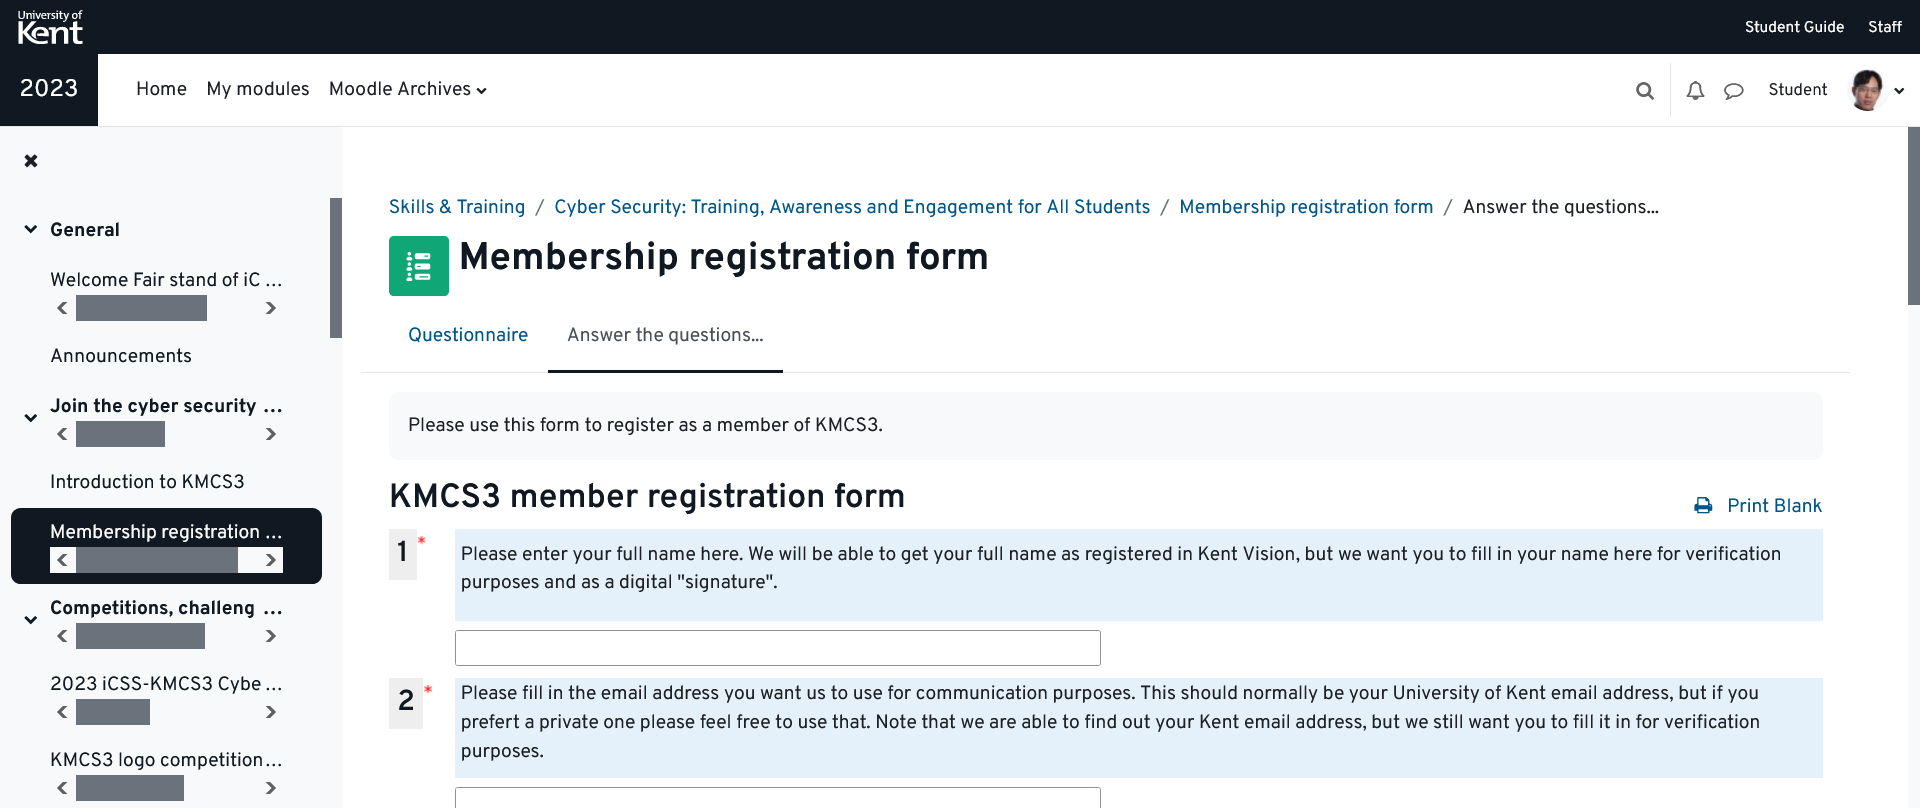 KMCS3 membership registration form in Moodle